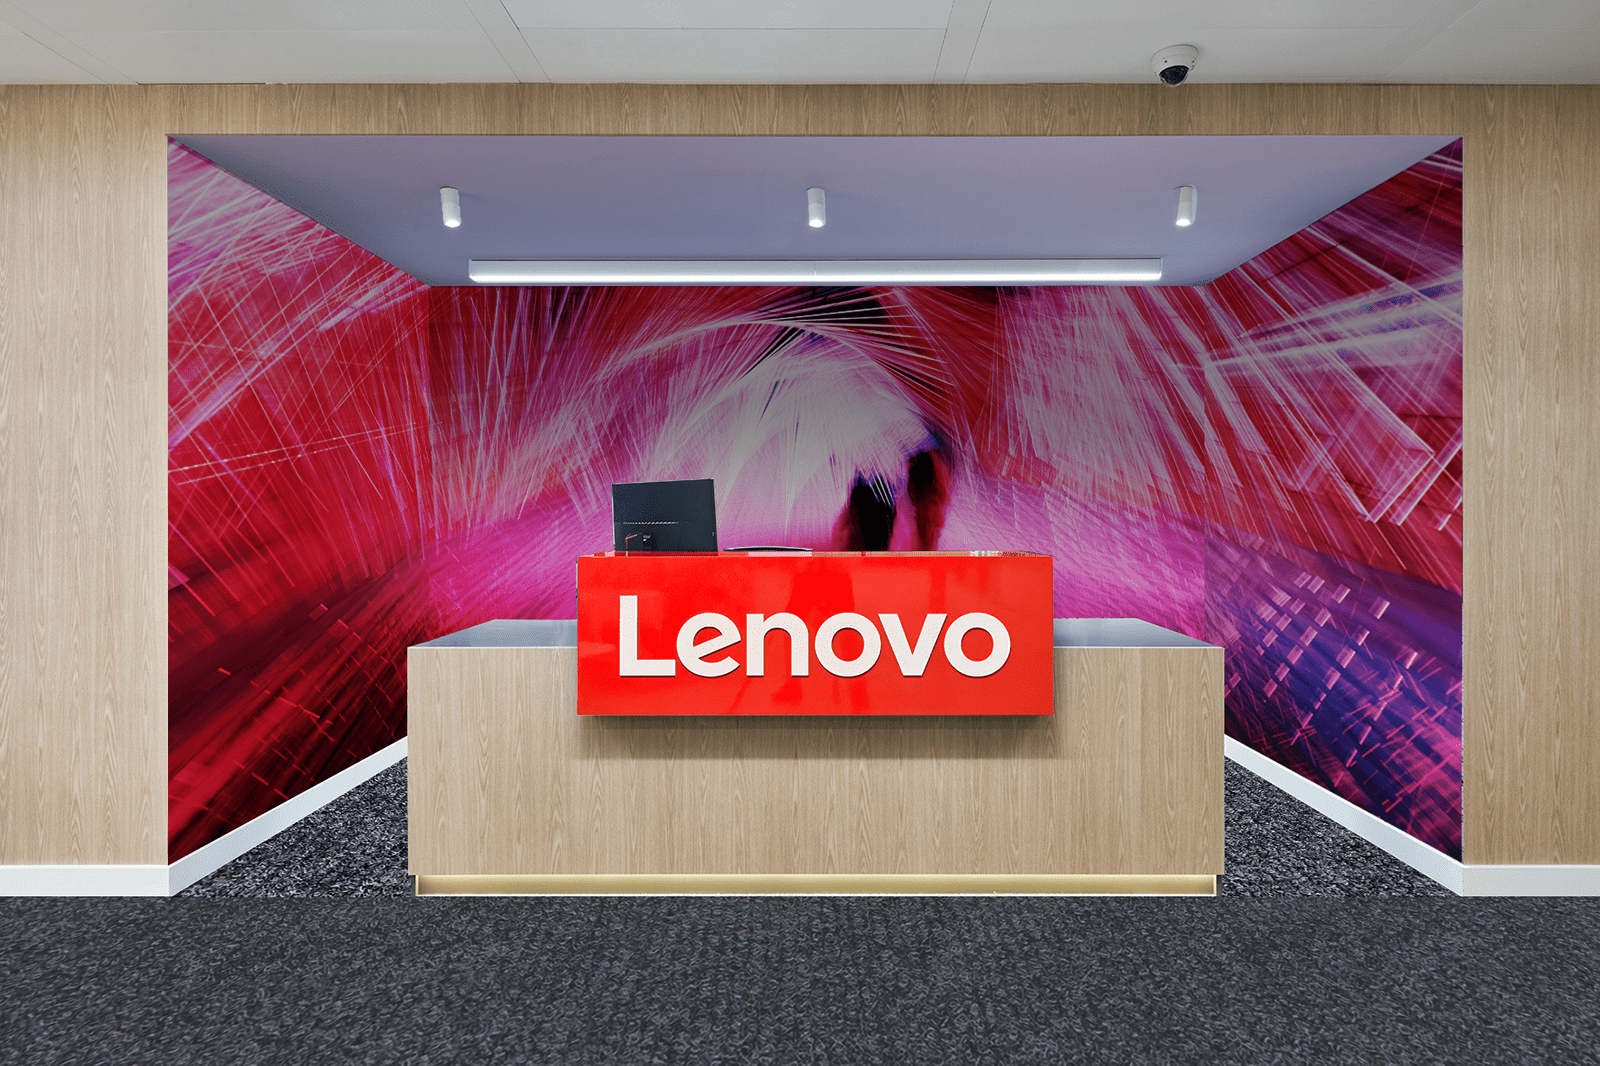 Lenovo Real Estate welcome desk